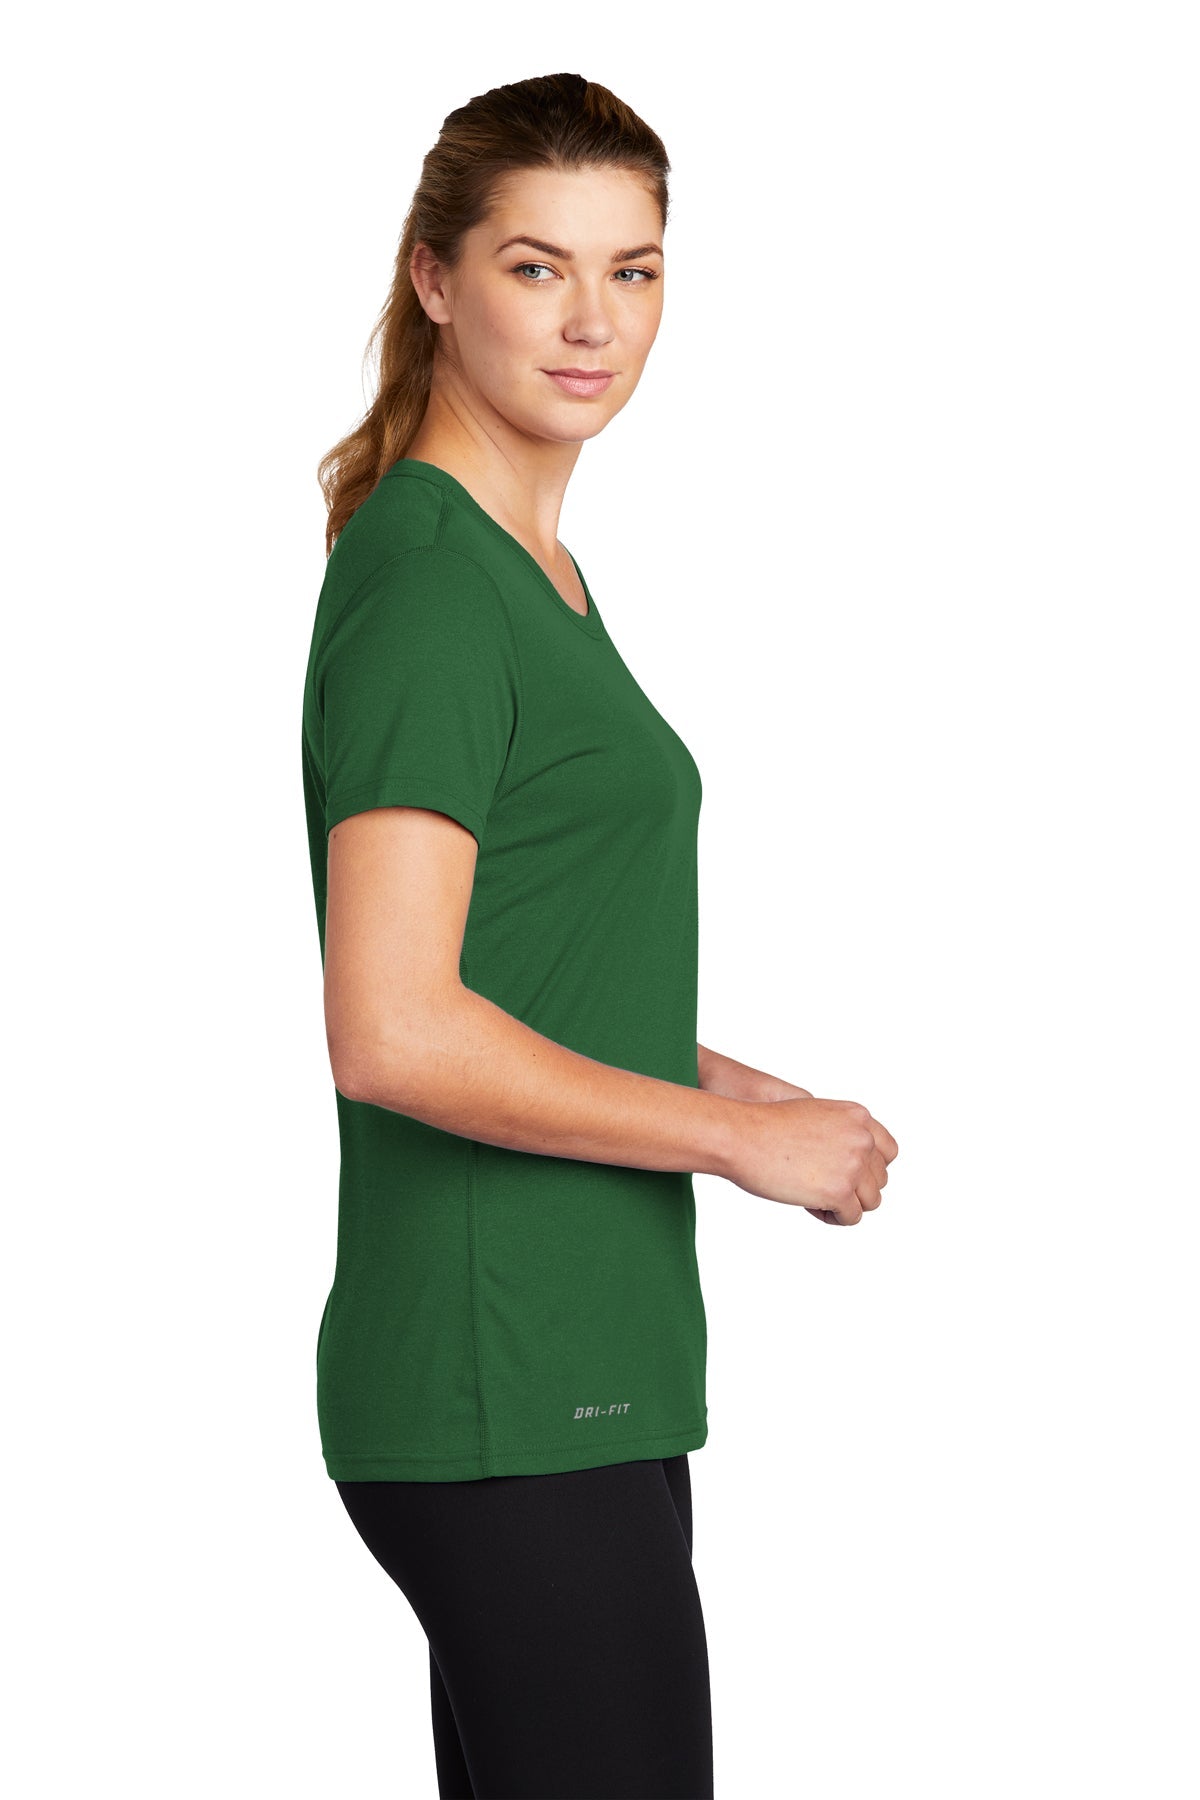 Nike Ladies Legend Customized T-Shirts, Gorge Green